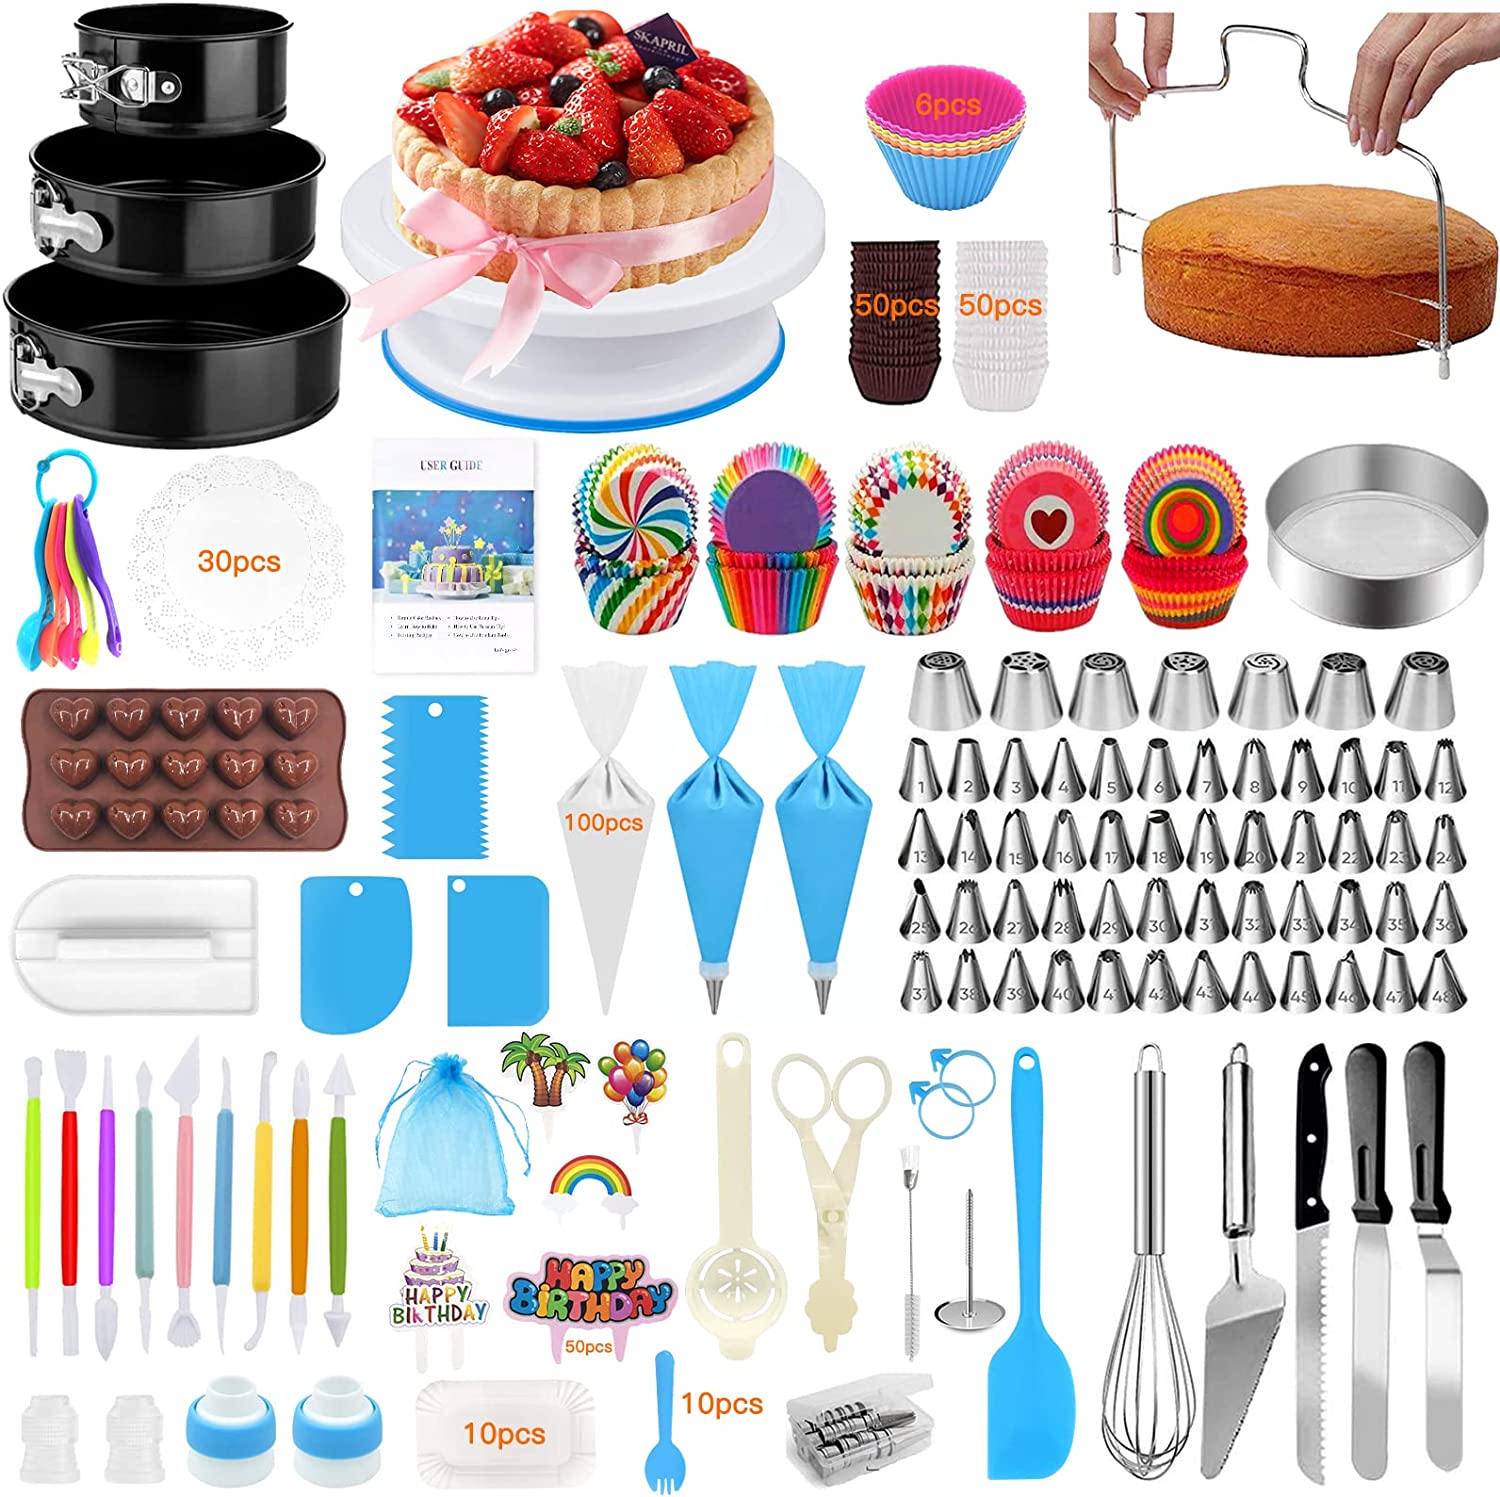 65PCs Cake Decorating Kit Baking Supplies Tools with Non-Slip Cake